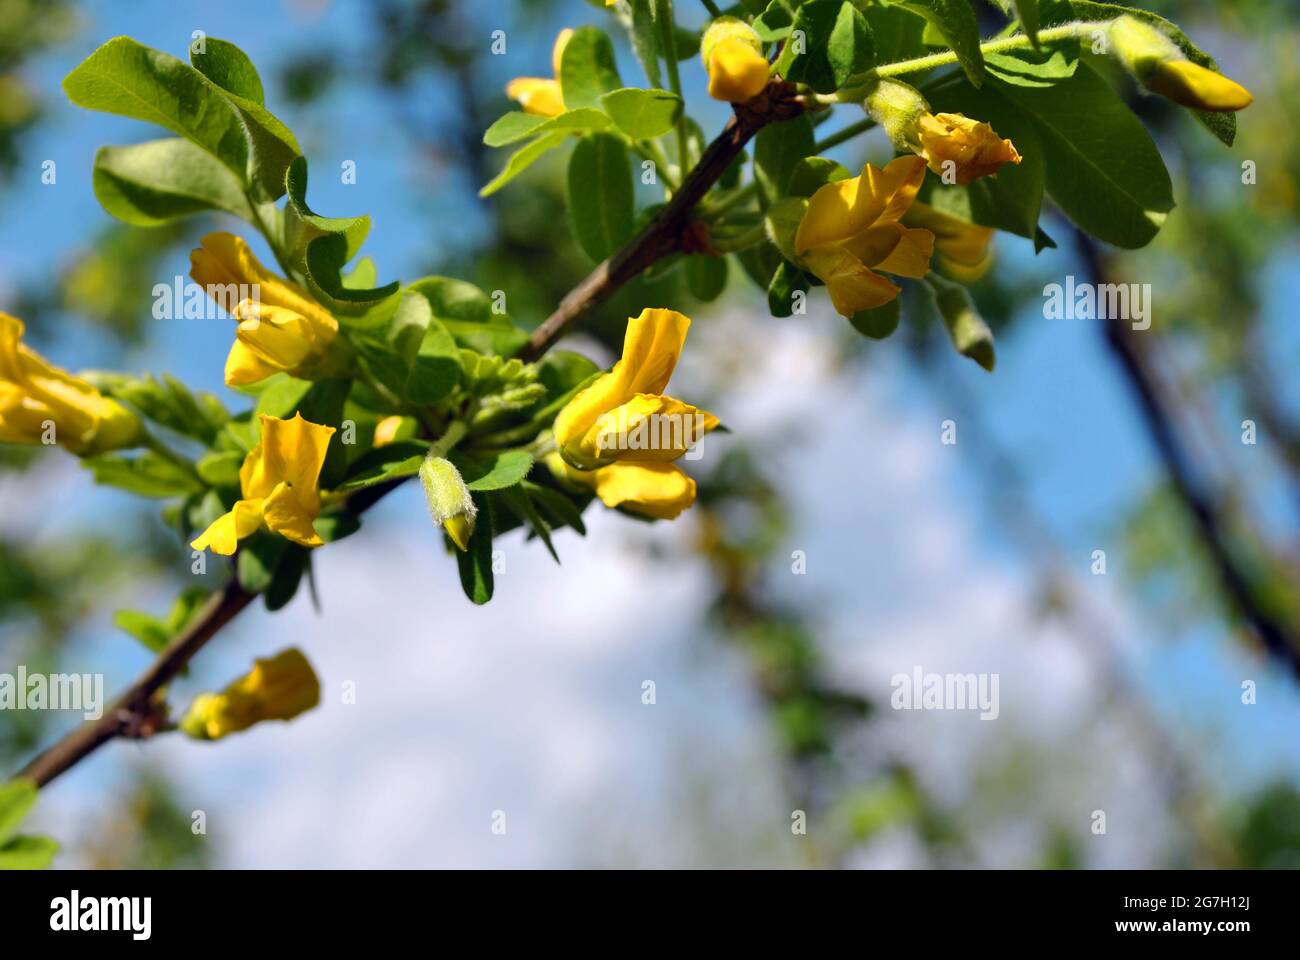 Caragana arborescens (Siberian peashrub, Siberian pea-tree, caragana) blossom on blue sky background, close up twig with flowers detail Stock Photo